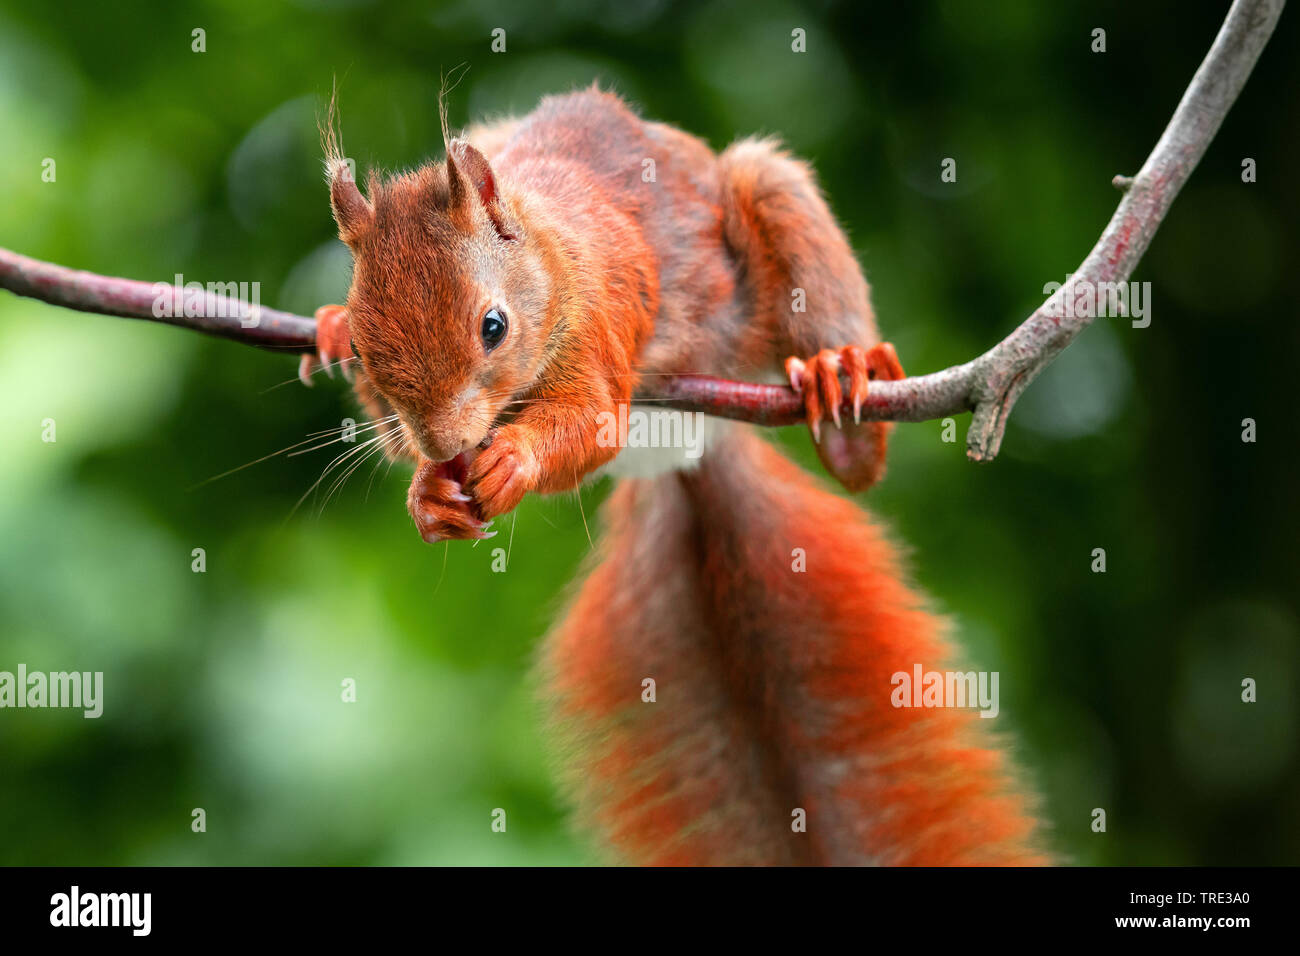 European red squirrel, Eurasian red squirrel (Sciurus vulgaris), eating on a twig, front view, Germany, North Rhine-Westphalia Stock Photo